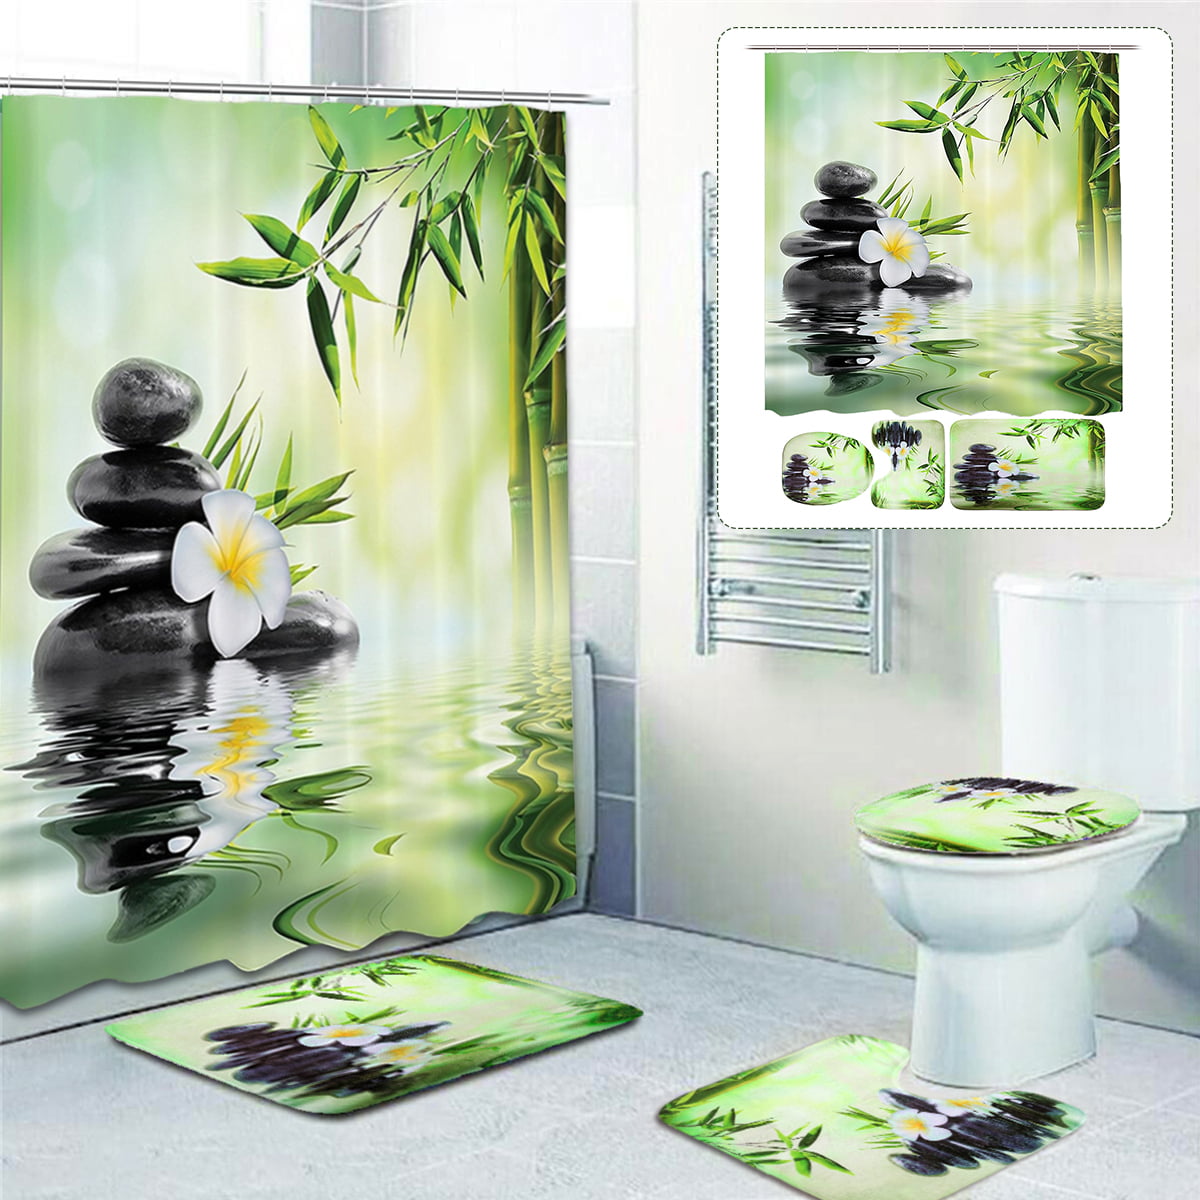 Waterproof Fabric Green Eyed Cat Shower Curtain Liner Bathroom Decor 12Hooks Set 